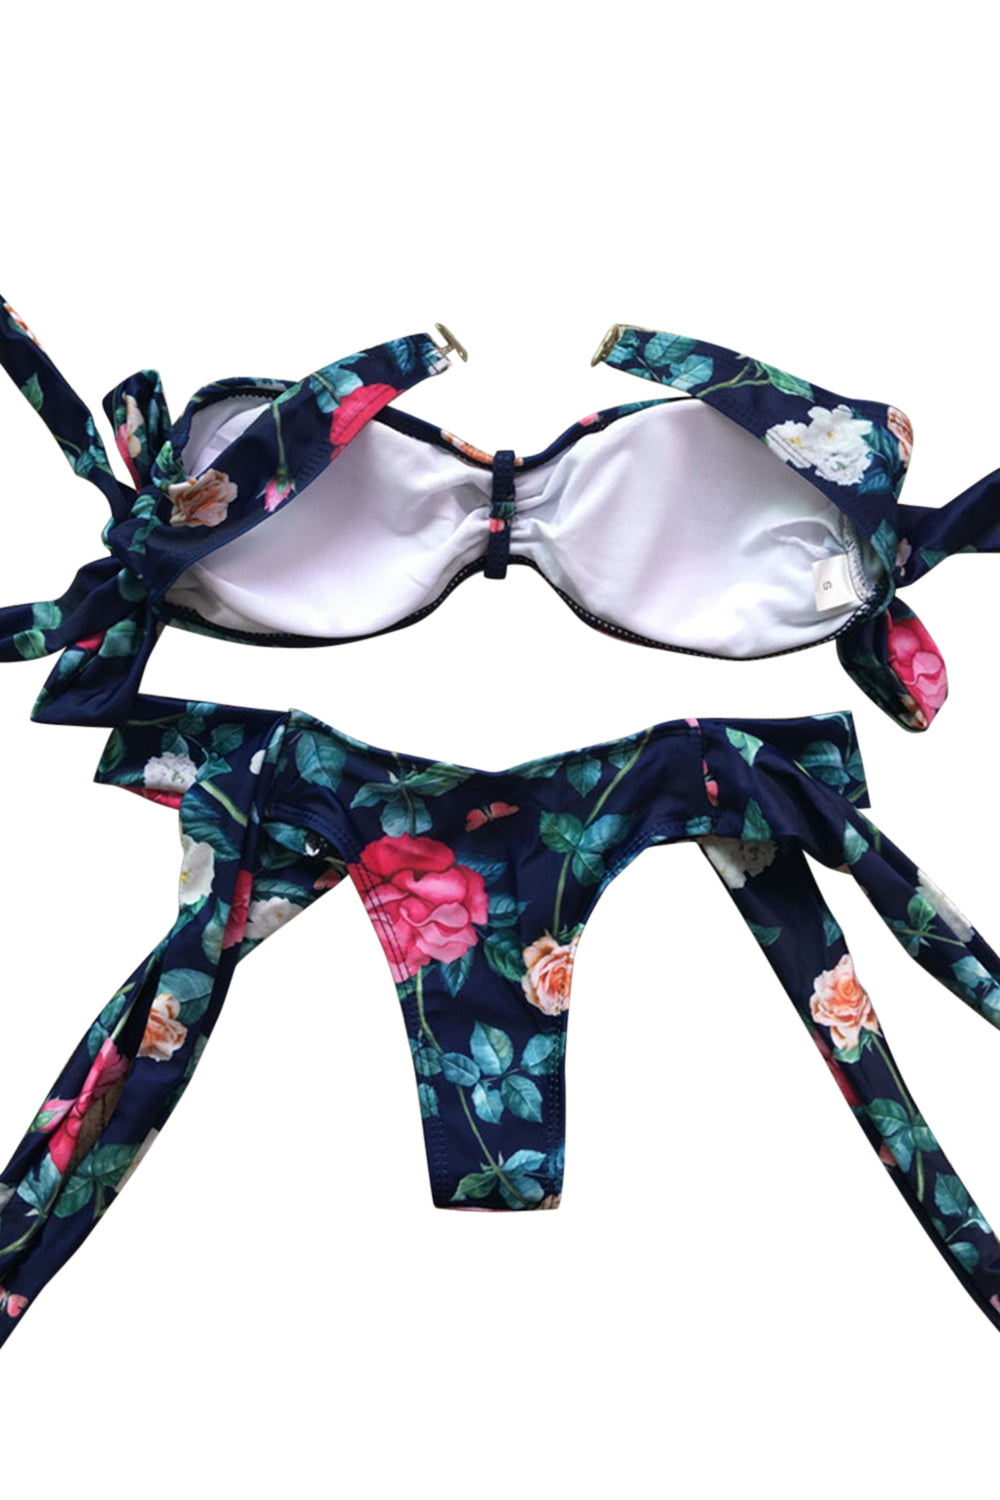 Iyasson Flower Printing Off-shoulder Design Tropical swimsuit